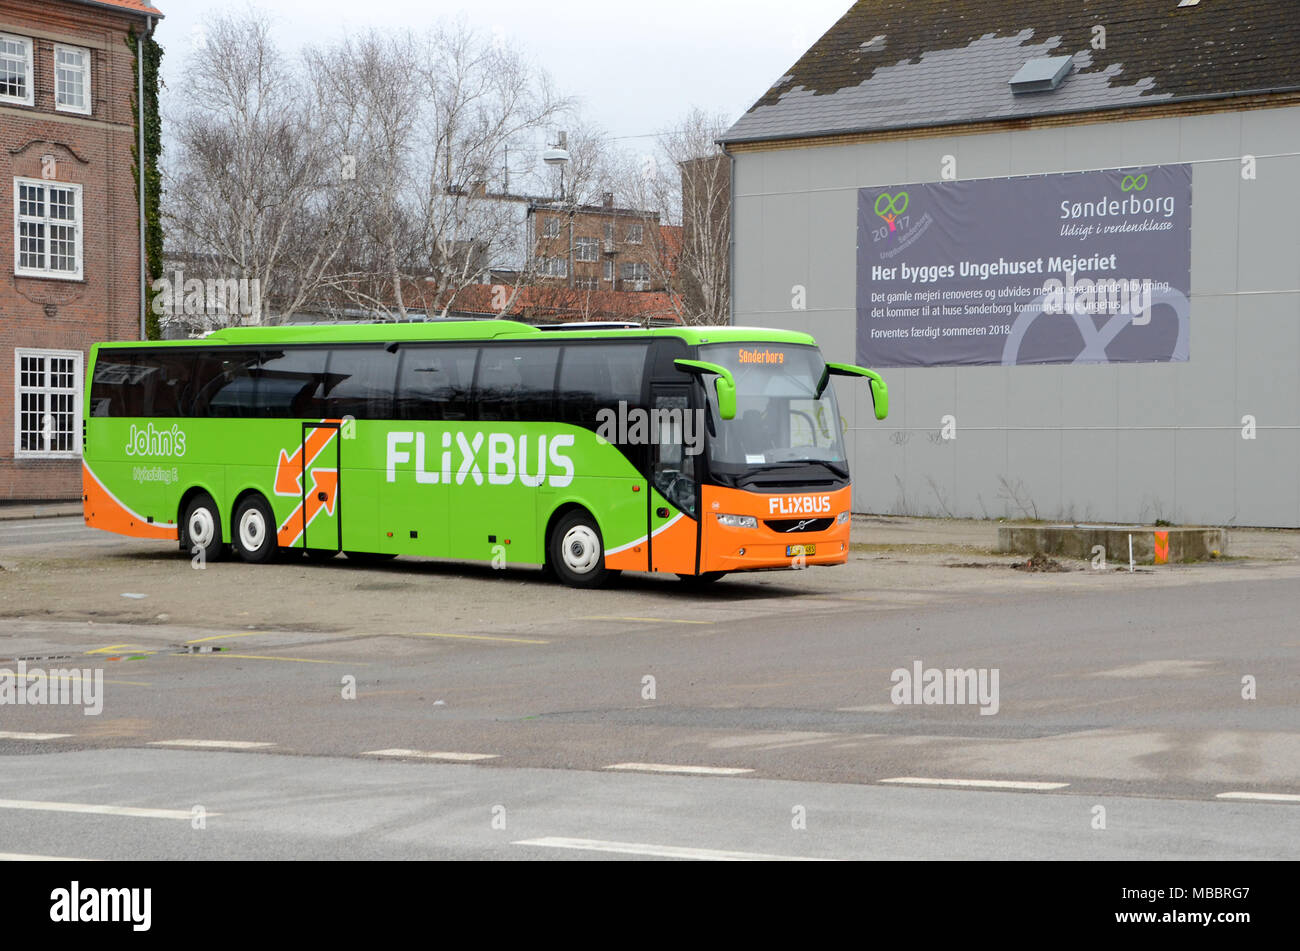 Sonderborg, Denmark- April 5, 2018: A green flixbus, part of a growing european network of low-price bus routes. Stock Photo